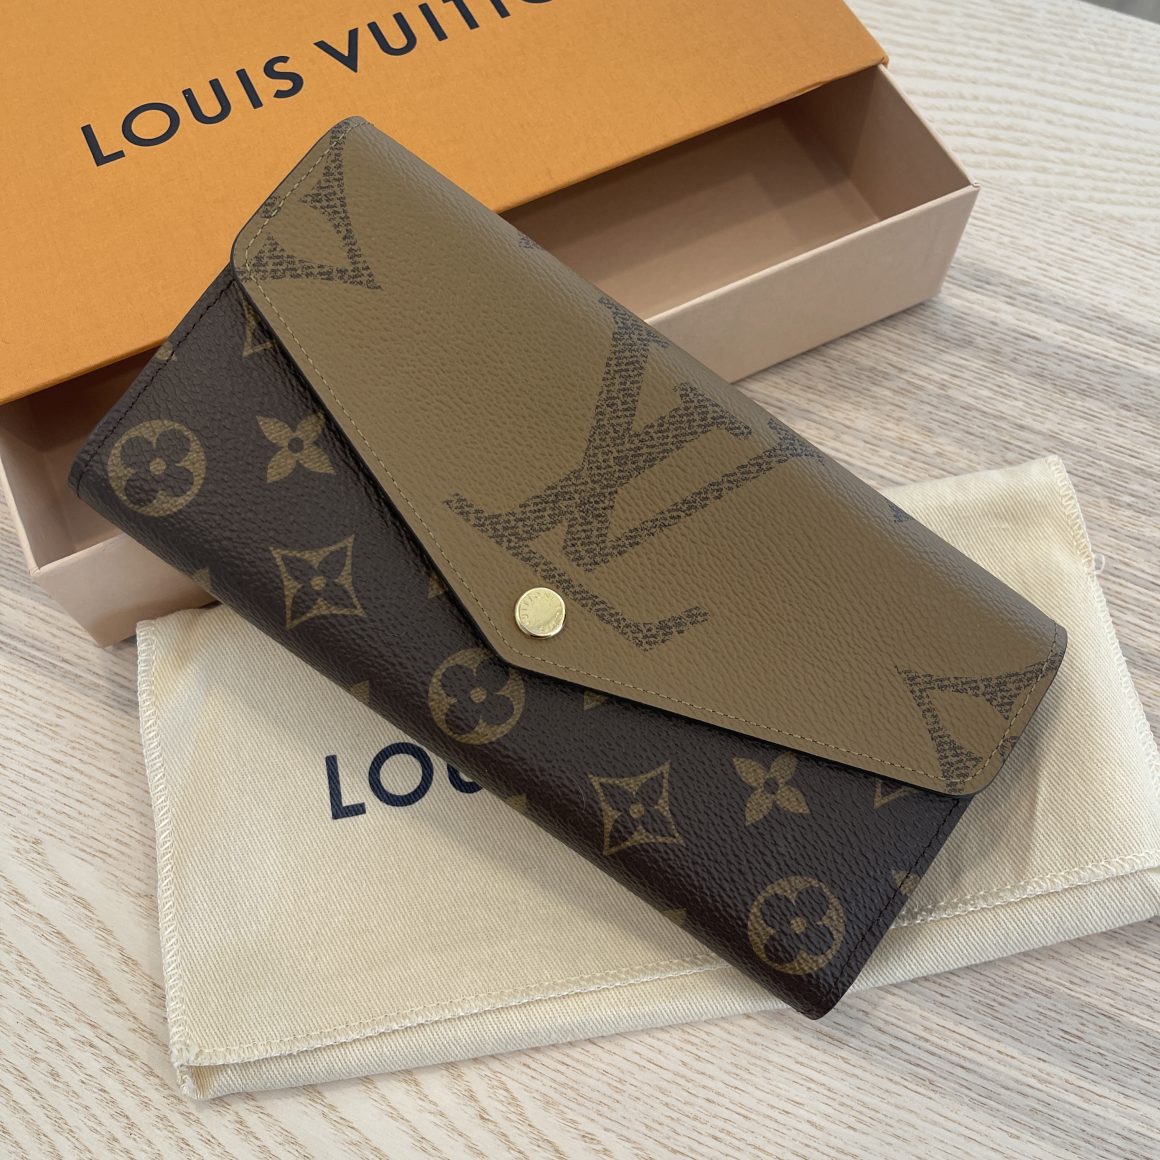 Louis Vuitton Date Code Sarah Wallet